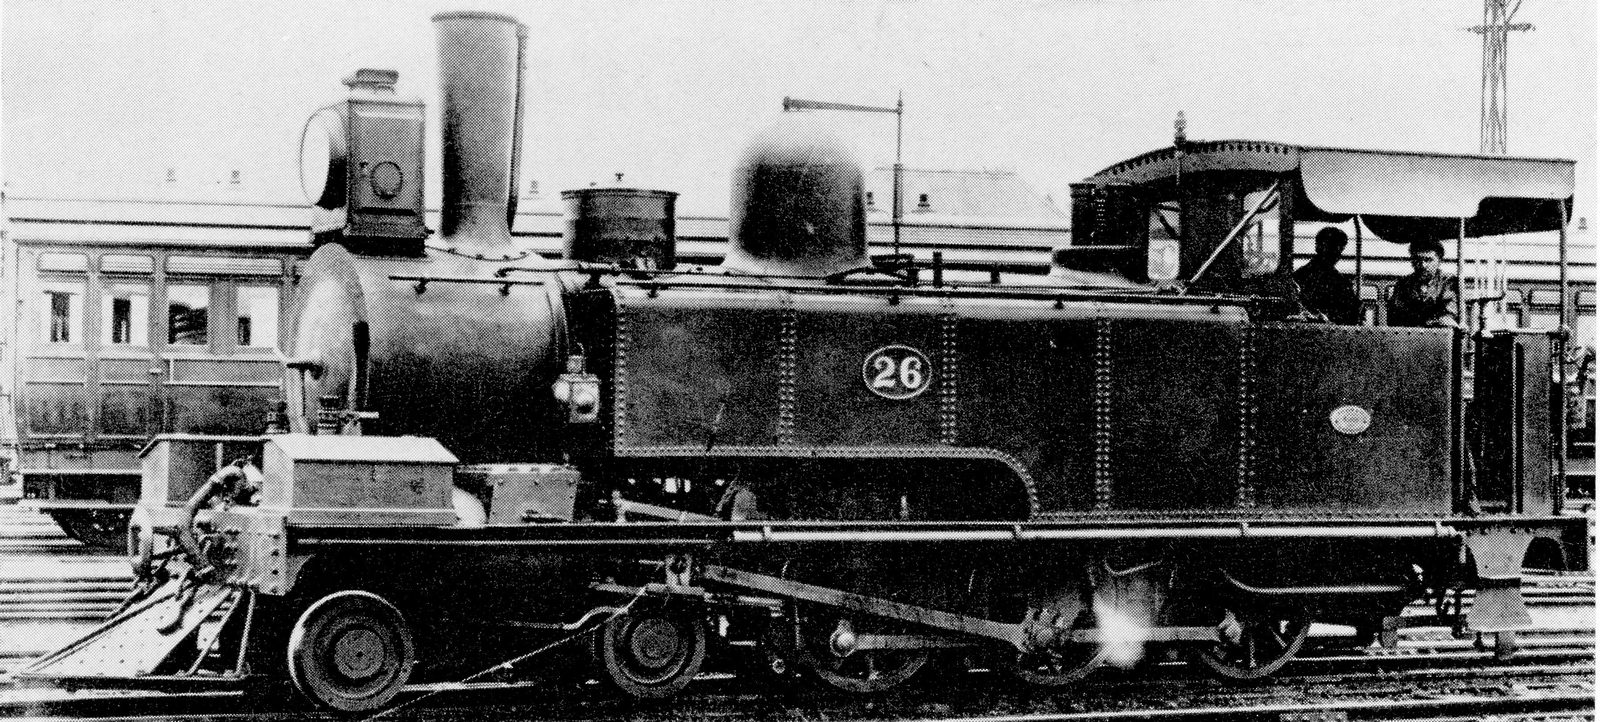 No. 26 built as 4-6-0T